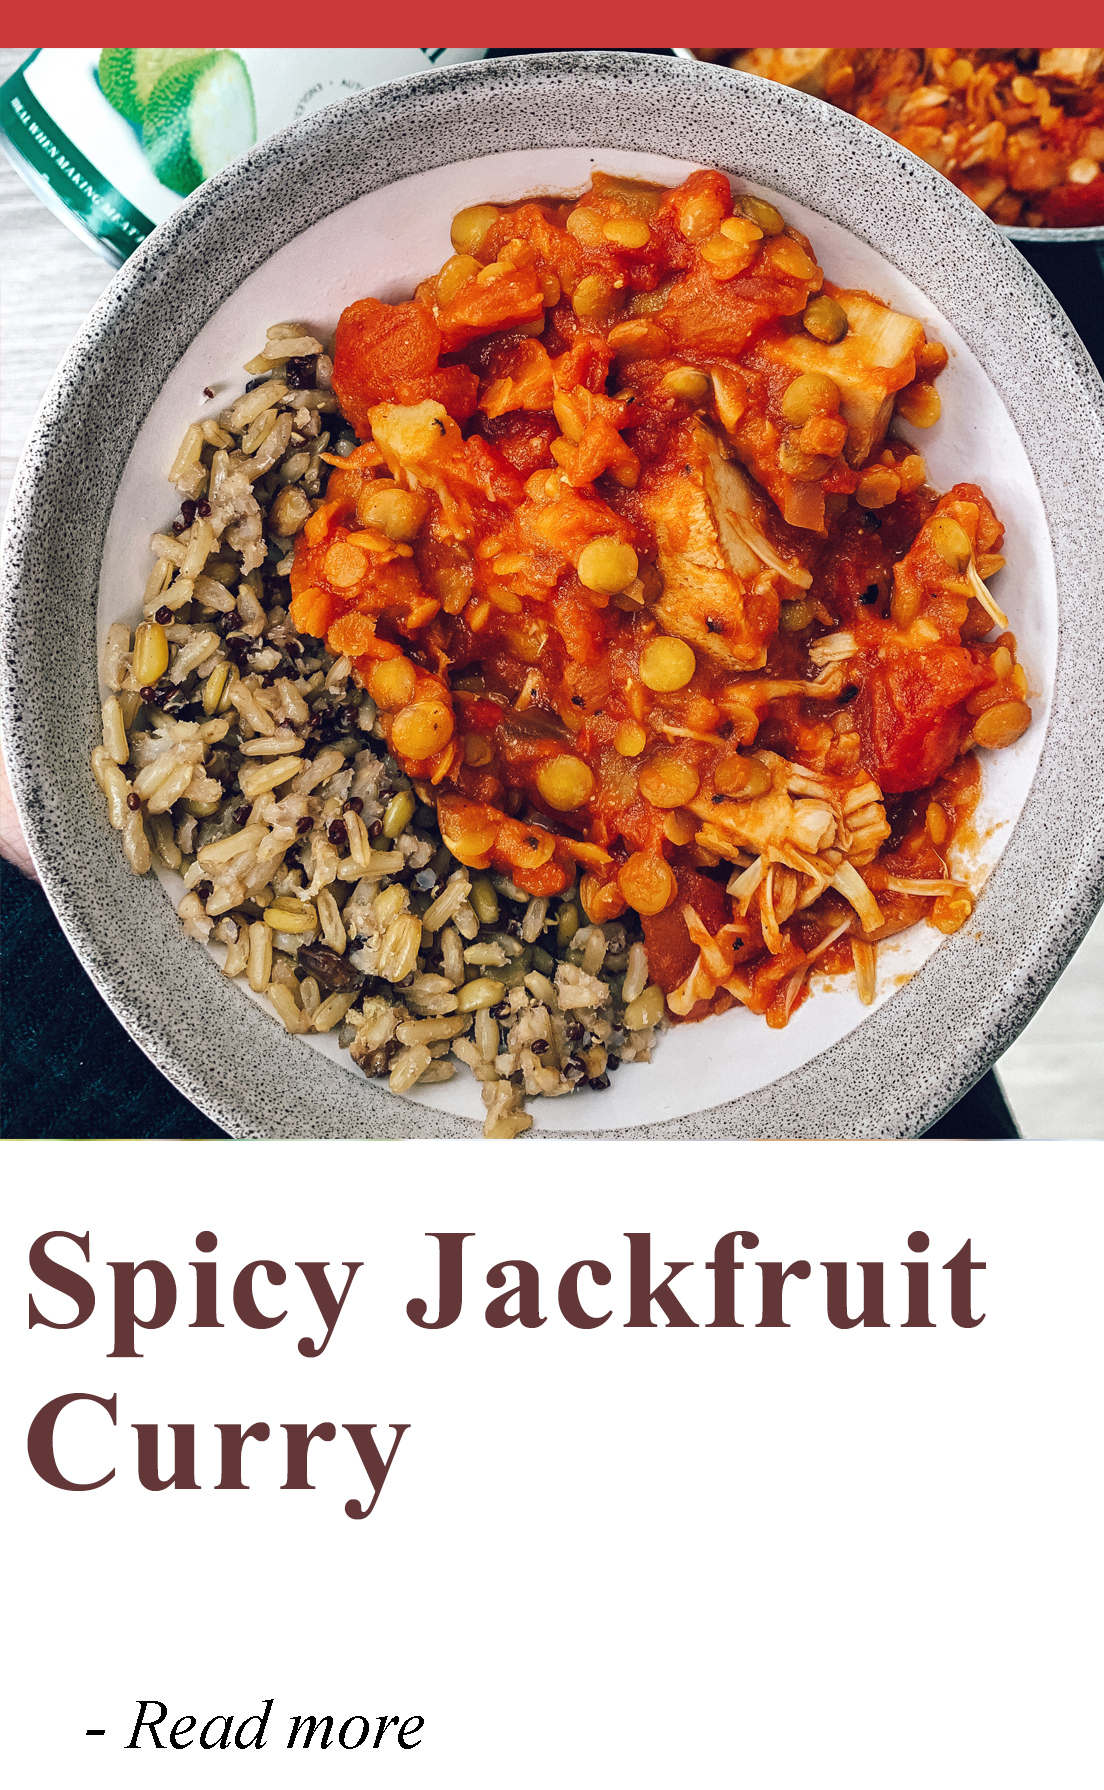 Jackfruit Curry.jpg